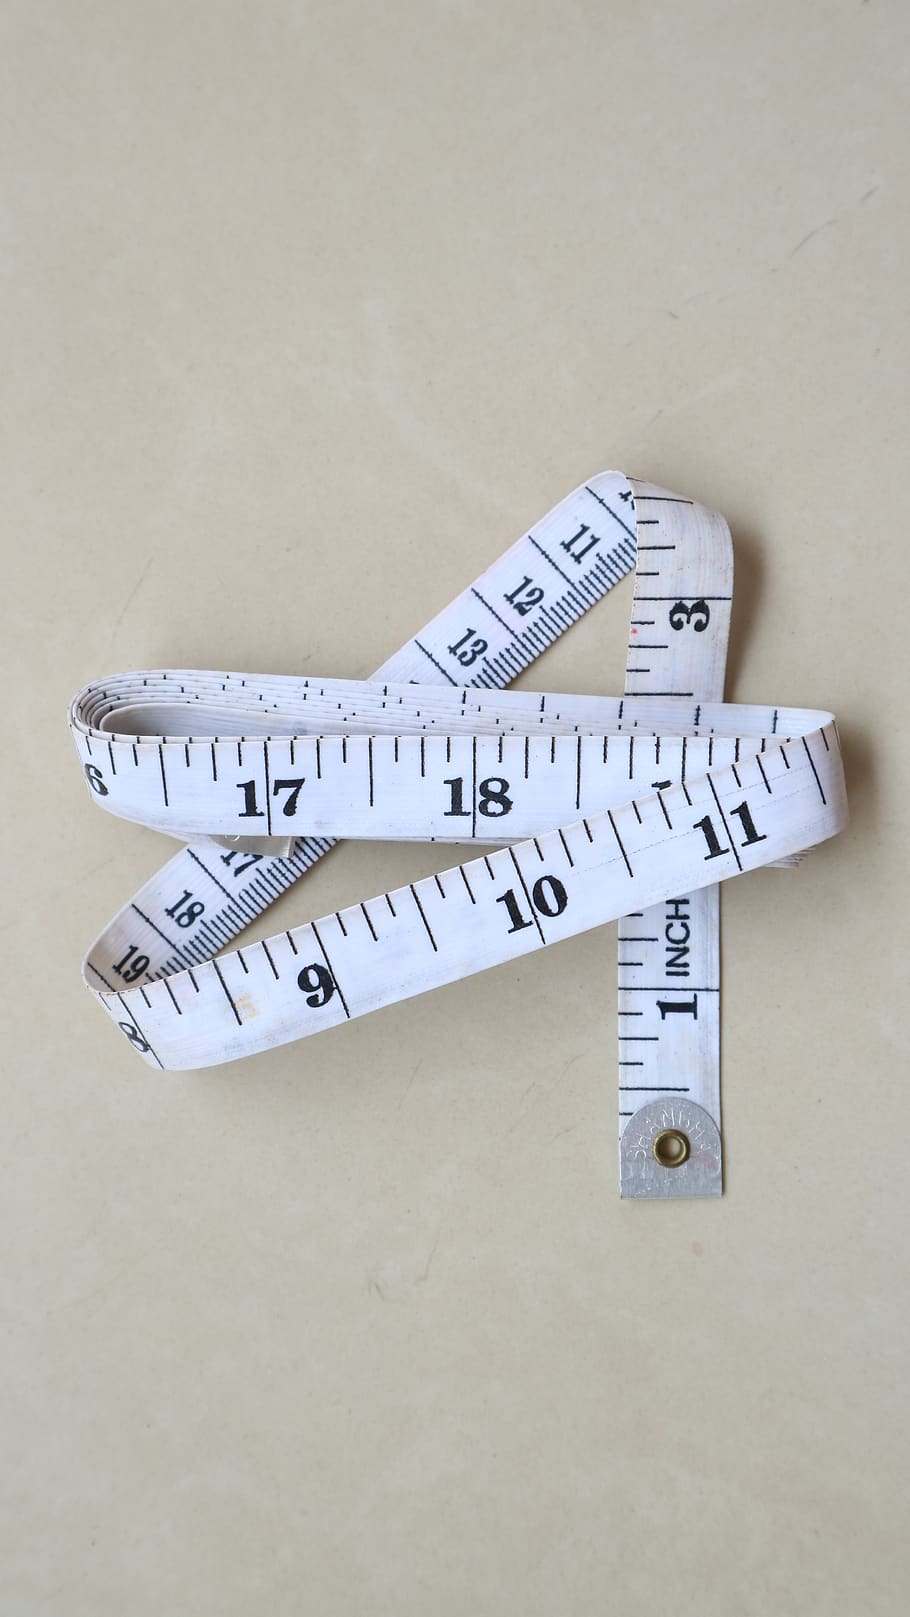 measuring instruments, rulers, gauges, meter, indoors, still life, instrument of measurement, number, tape measure, table